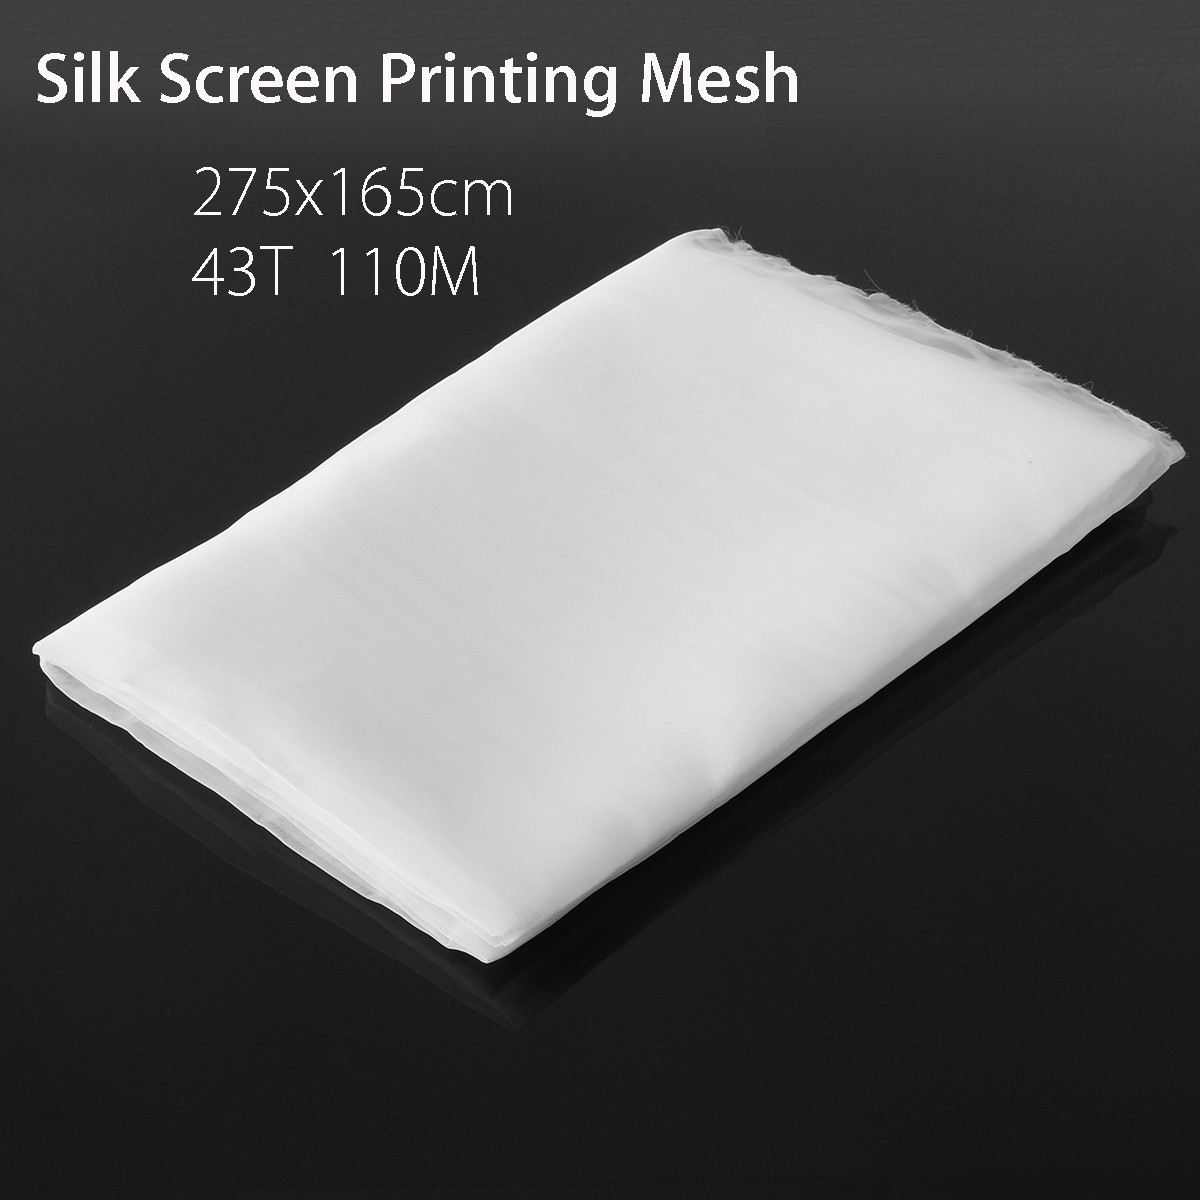 43T 110M White Polyester Silk Screen Printing Mesh Fabric Textile 275x165cm 2